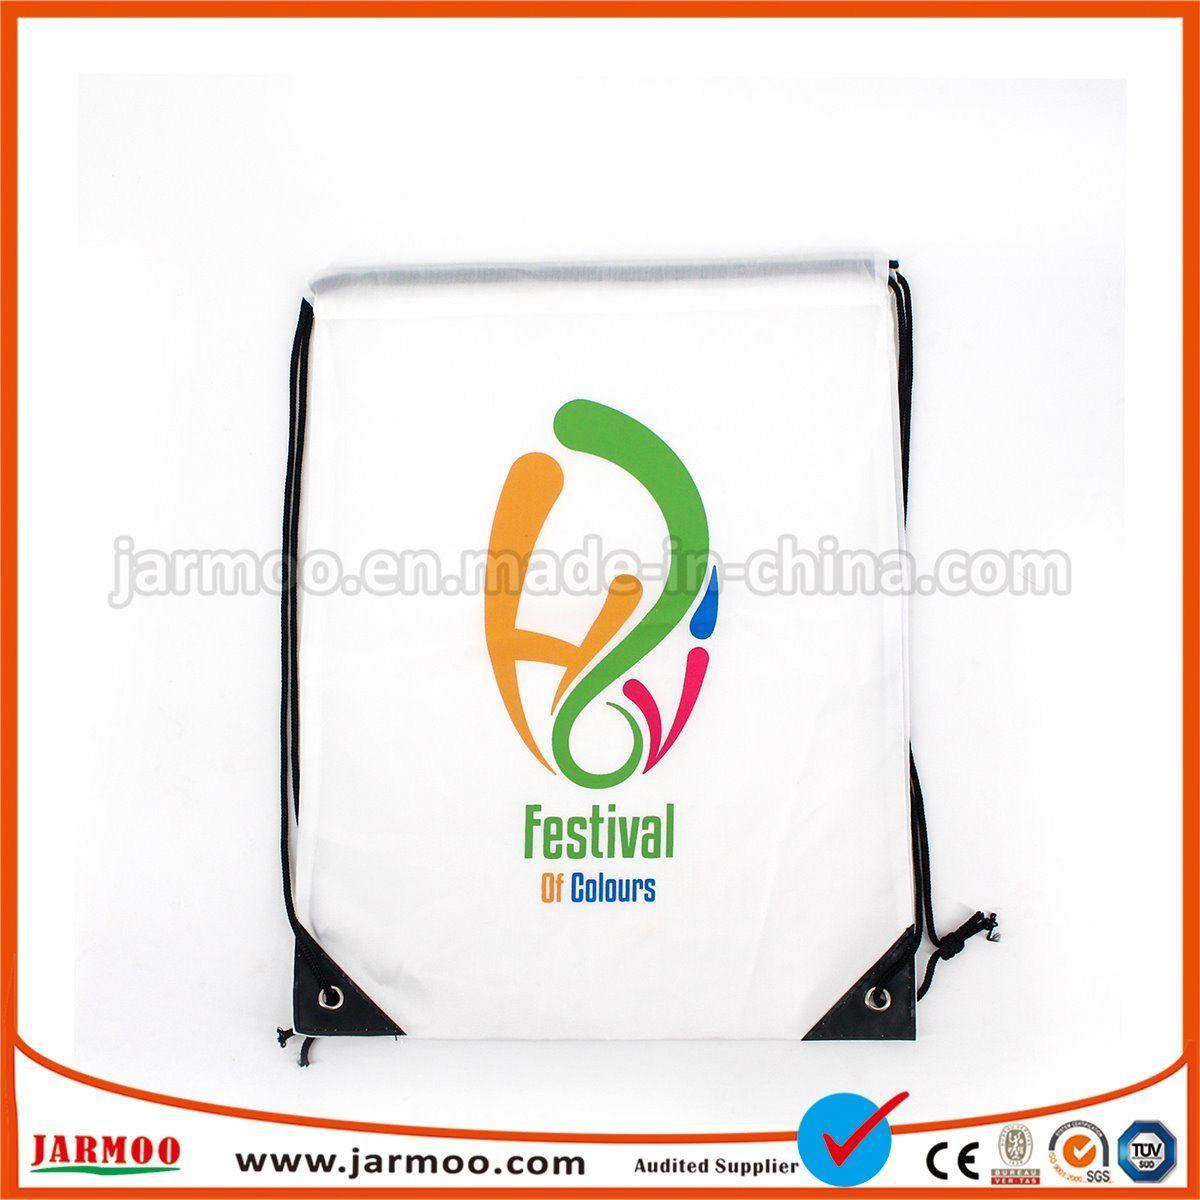 Drawstring Logo - [Hot Item] Hotsale Cheap Polyester Drawstring Bag with Logo Printed